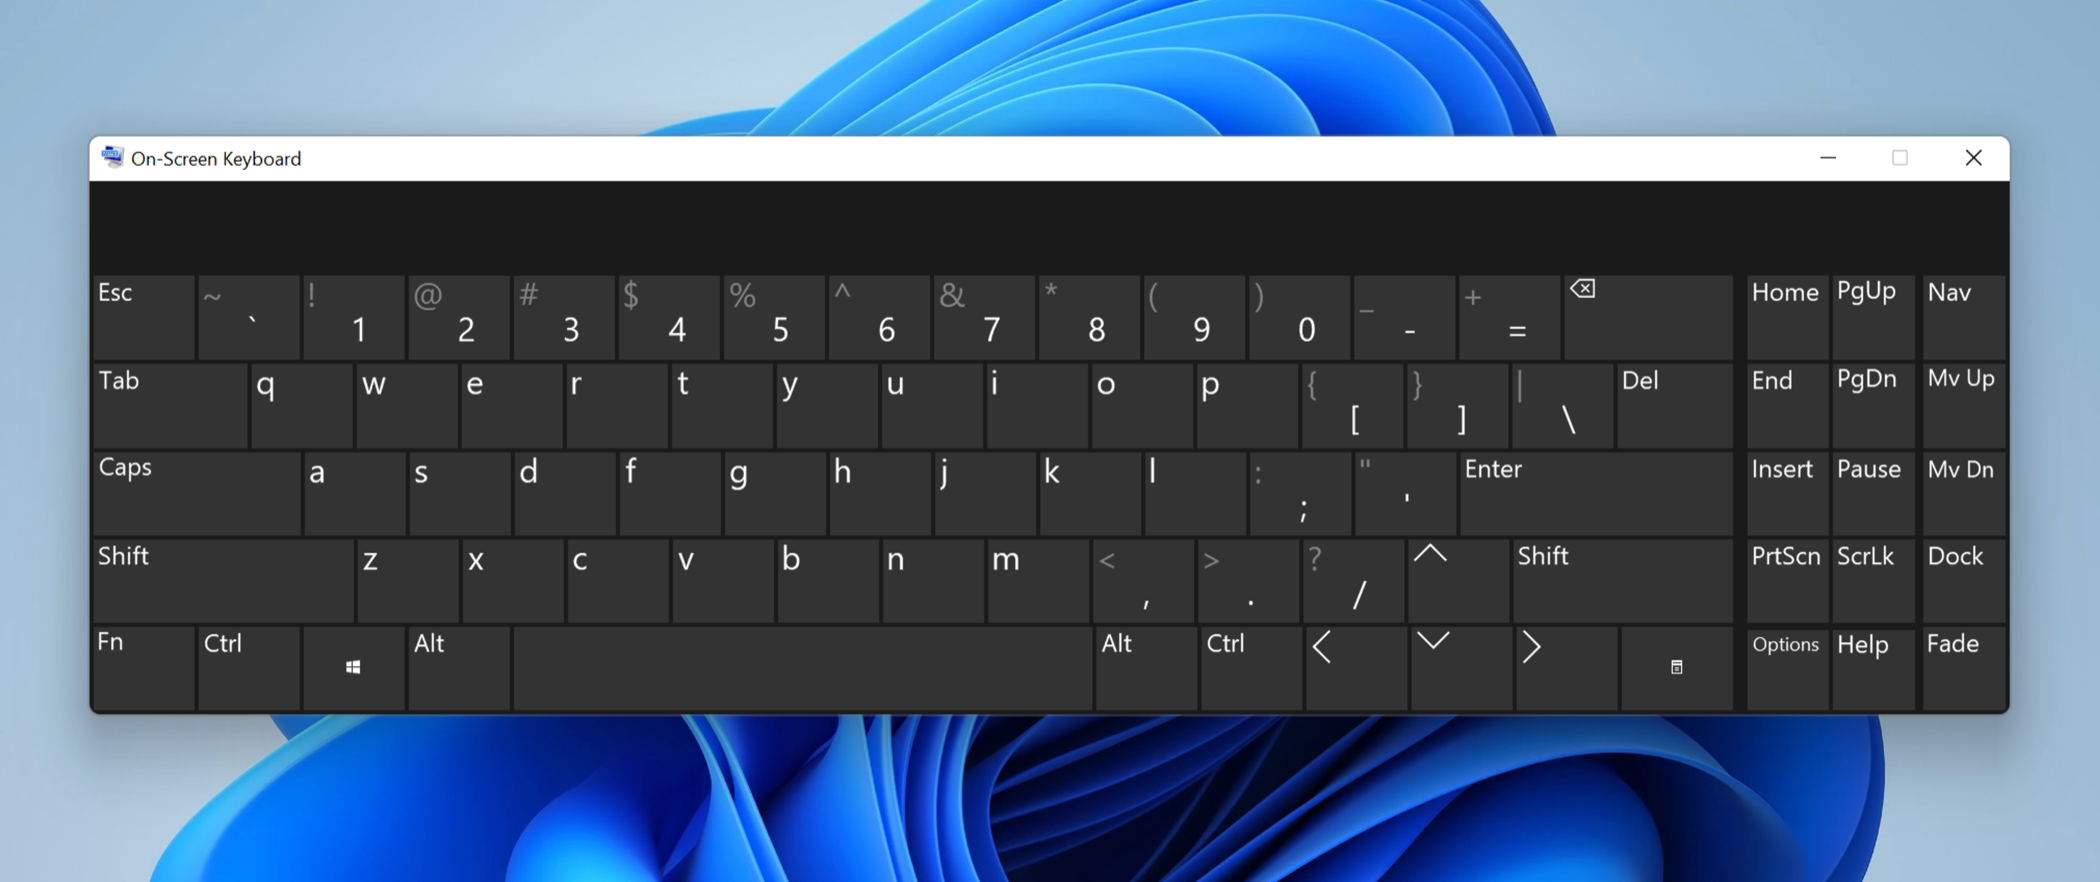 Windows 11's On-Screen Keyboard app can trigger the Start Menu too